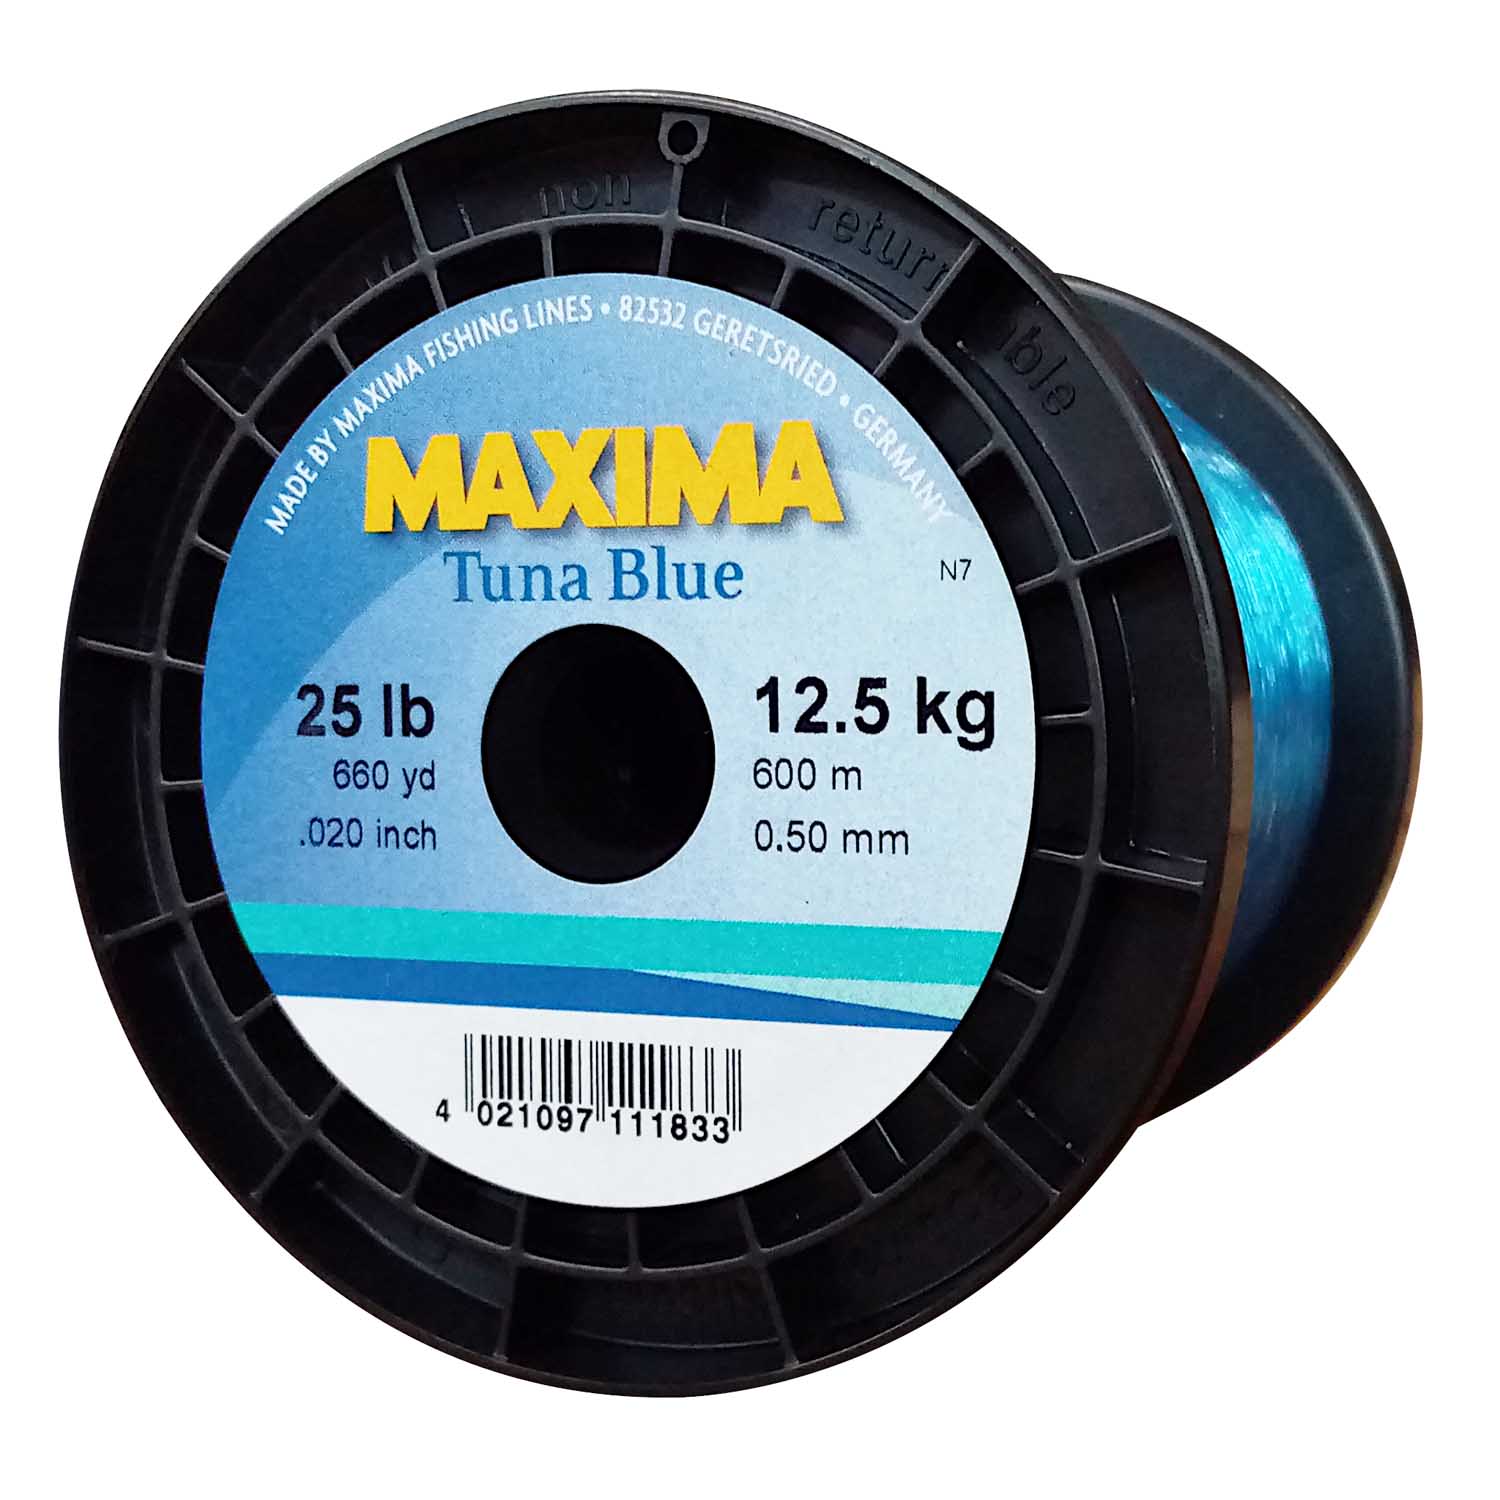 Maxima Tuna Blue Fishing Line - Guide Spools